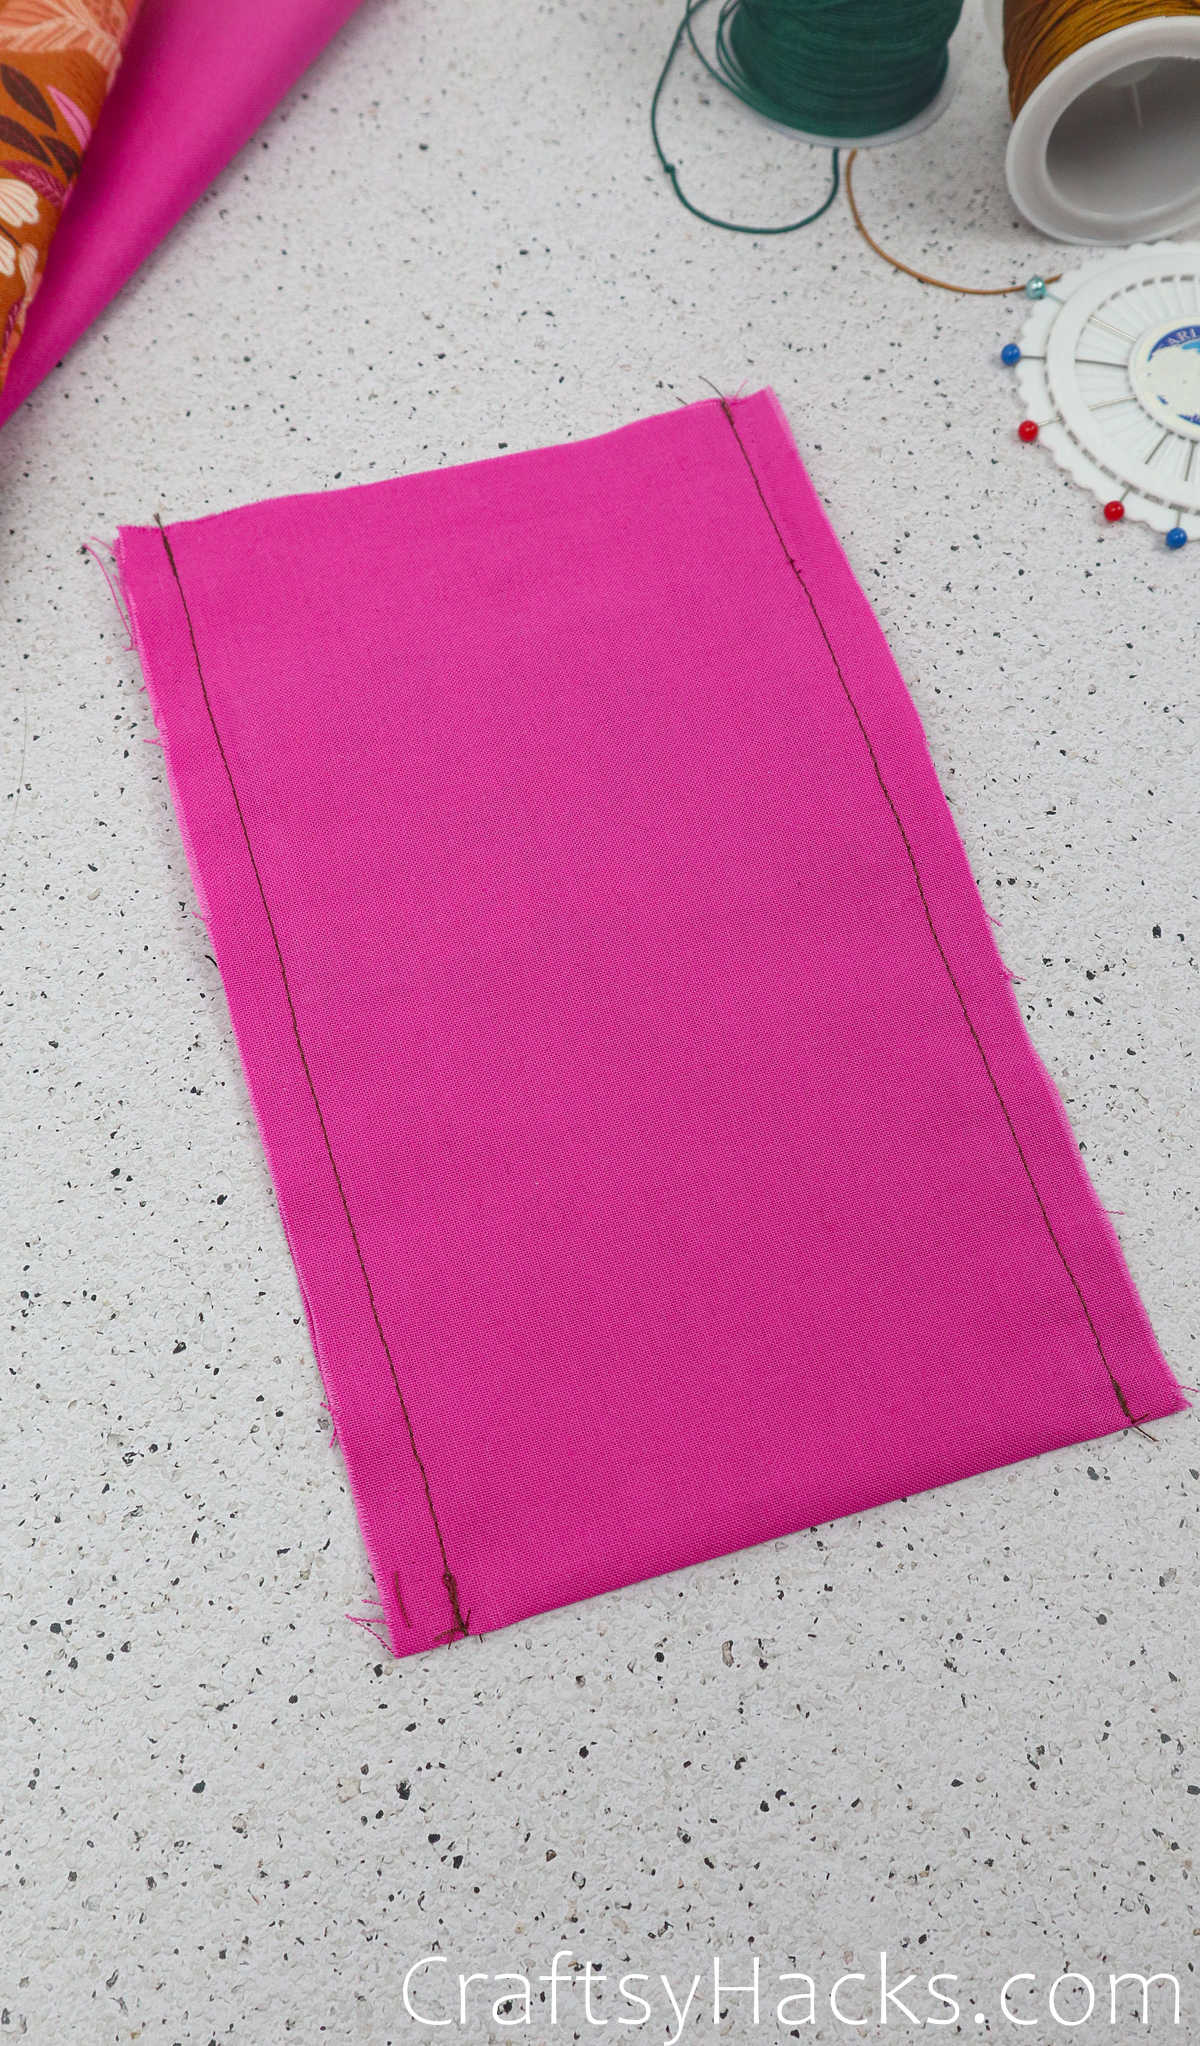 sewn fabric edges